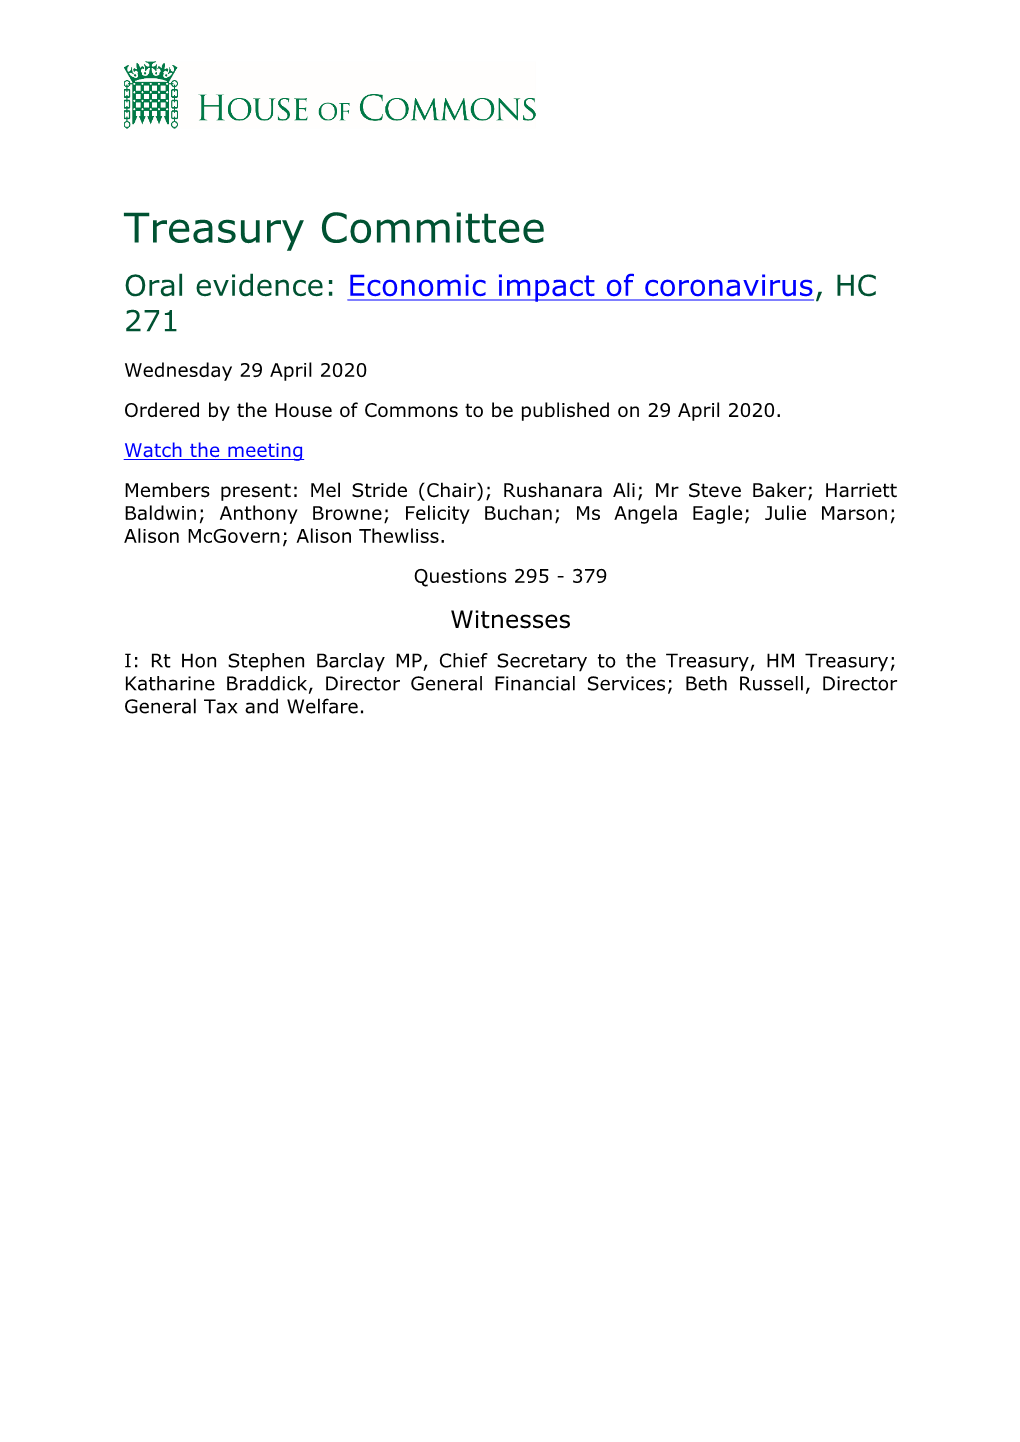 Treasury Committee Oral Evidence: Economic Impact of Coronavirus, HC 271